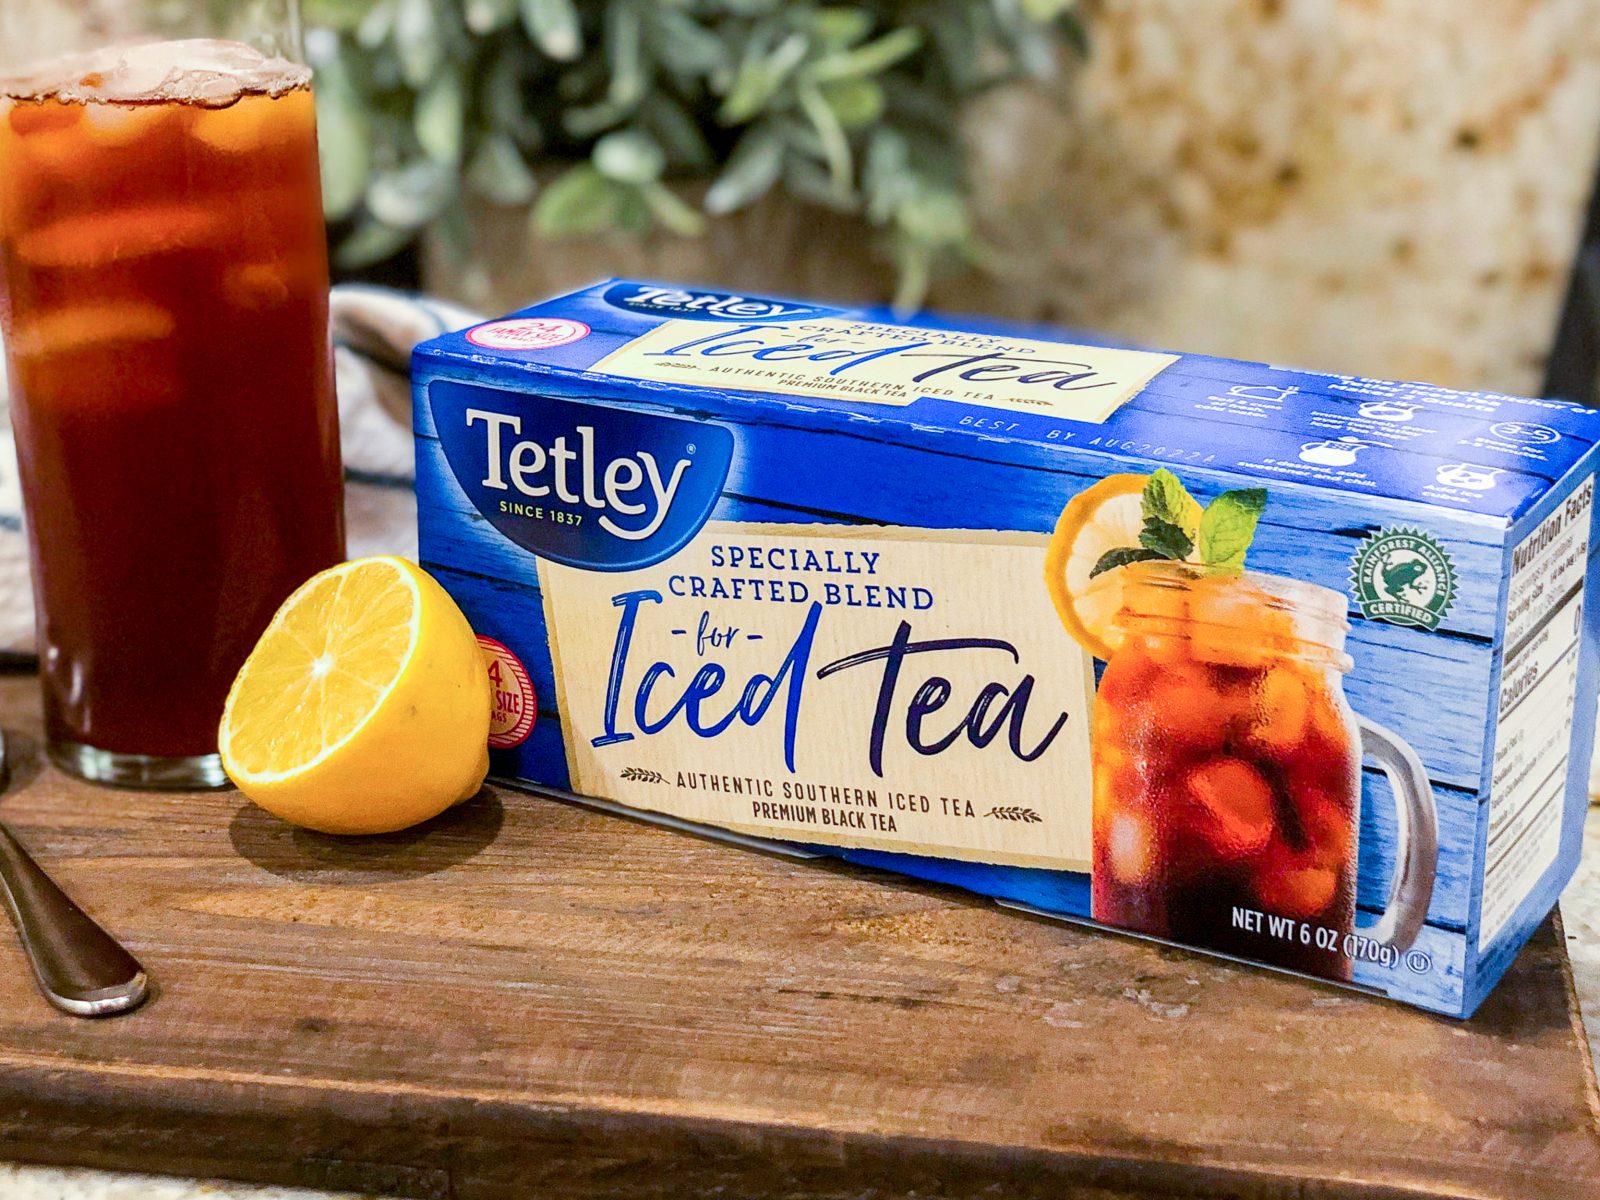 Tetley Tea Coupon Makes 24-Count Box Just $2.29 At Kroger